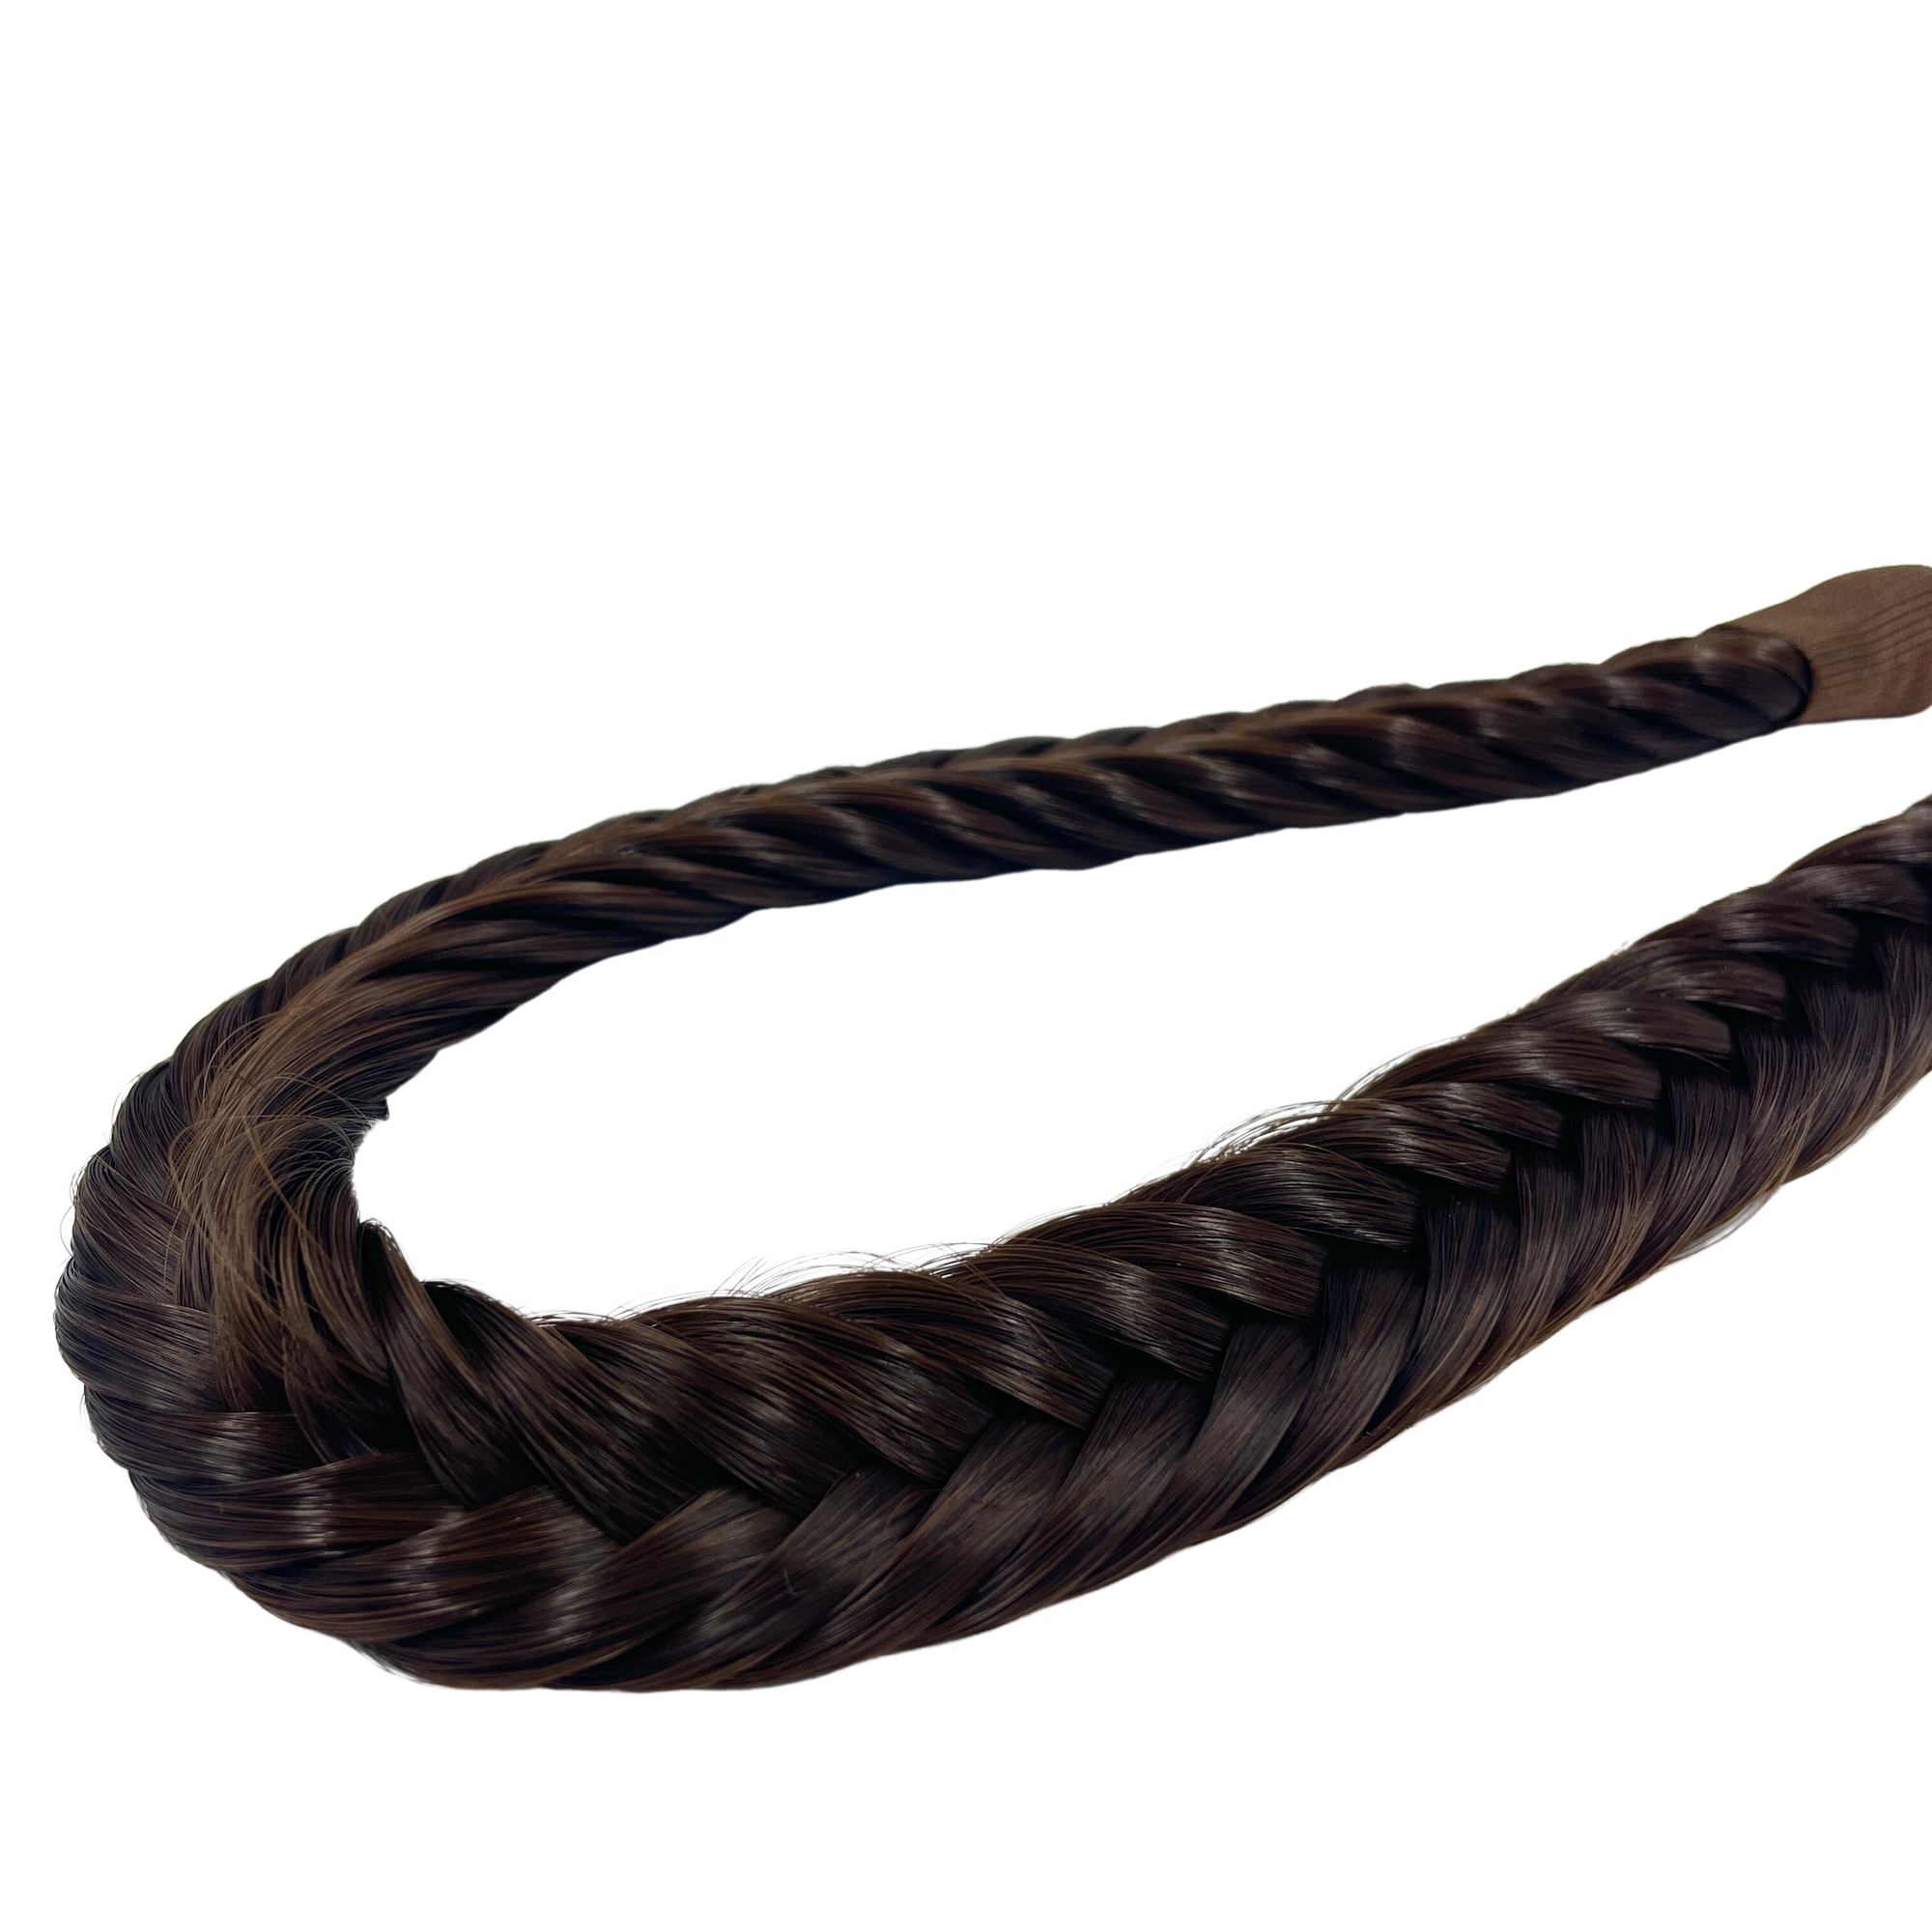 image of hair rehab london plait braid fishtail headband hairband in shade chocolate